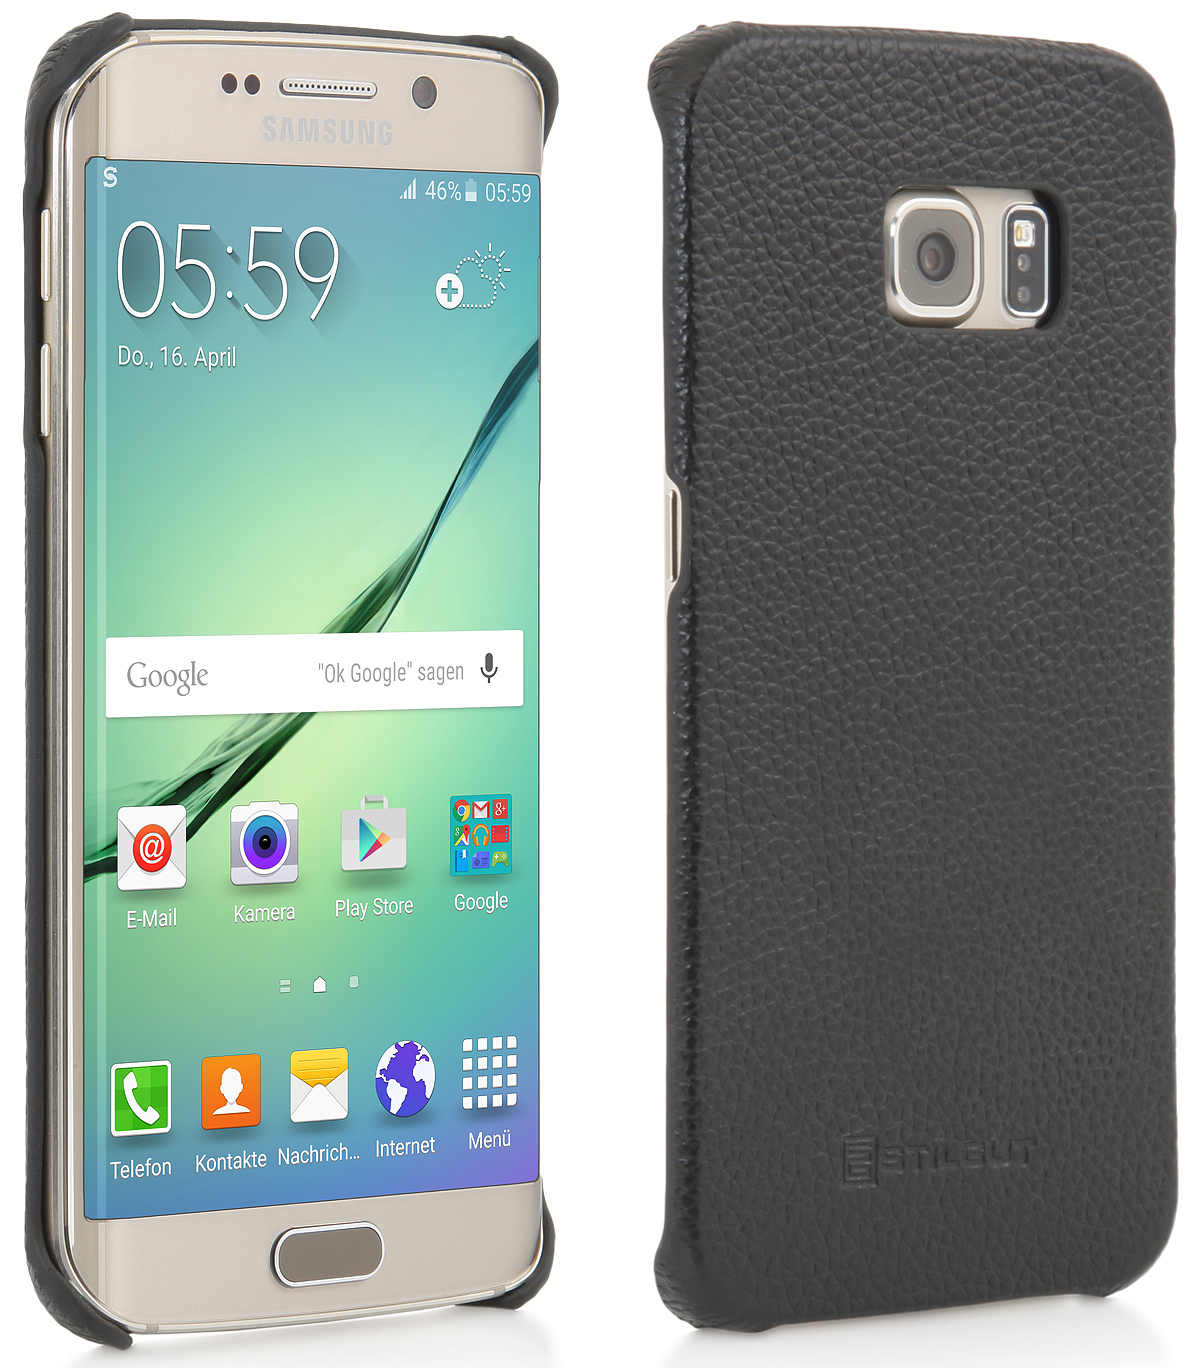 kedel bassin jubilæum Samsung Galaxy S6 Edge Case made out of Leather | StilGut | StilGut